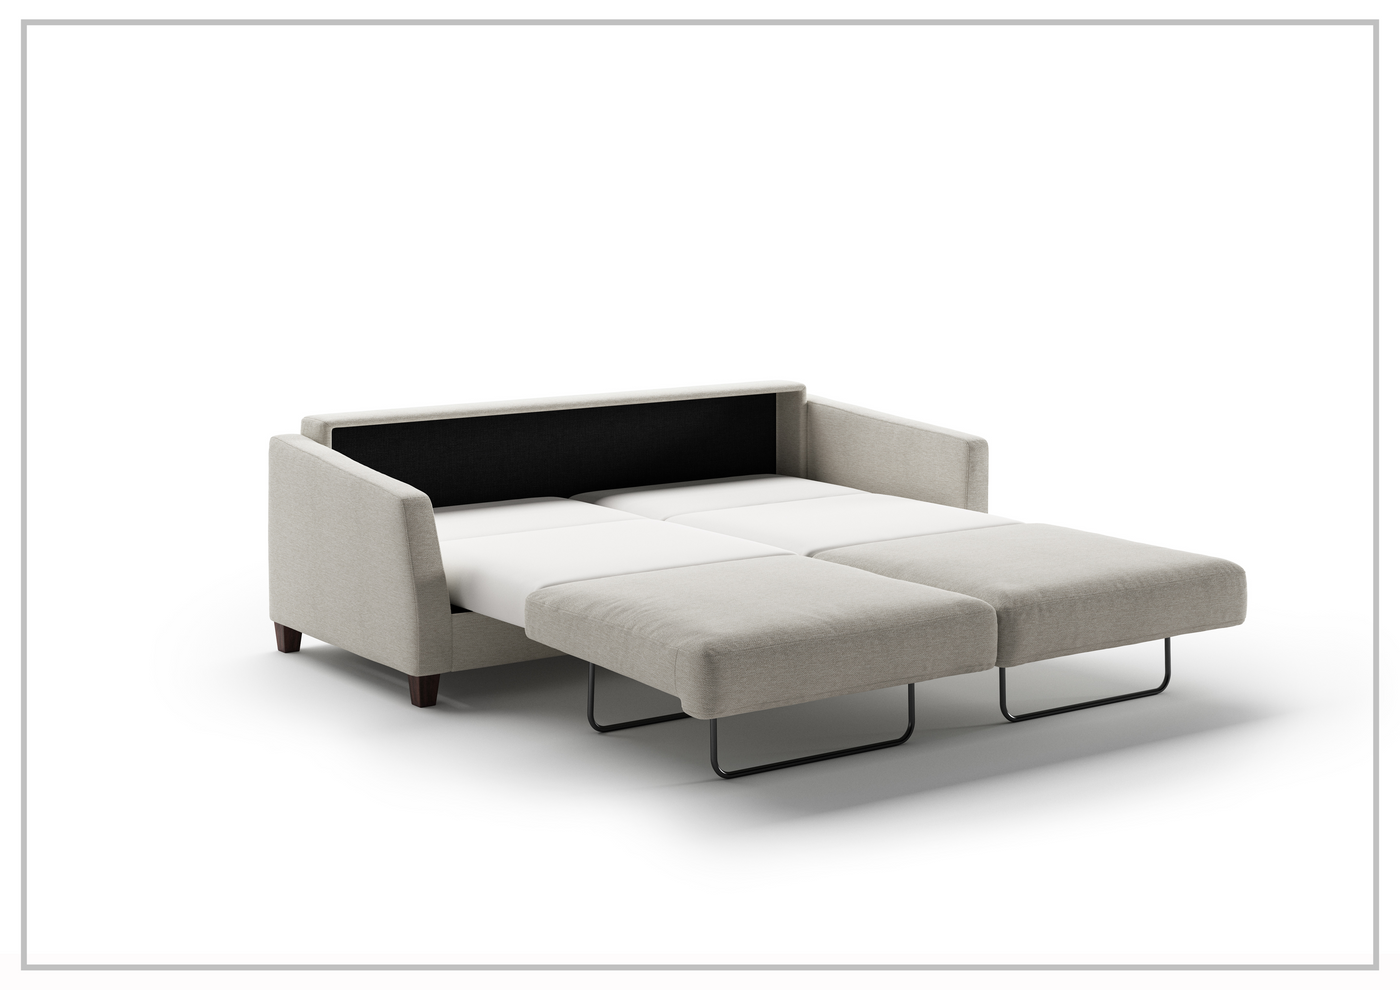 Monika King Sleeper Sofa Bed With Wood or Chrome Legs